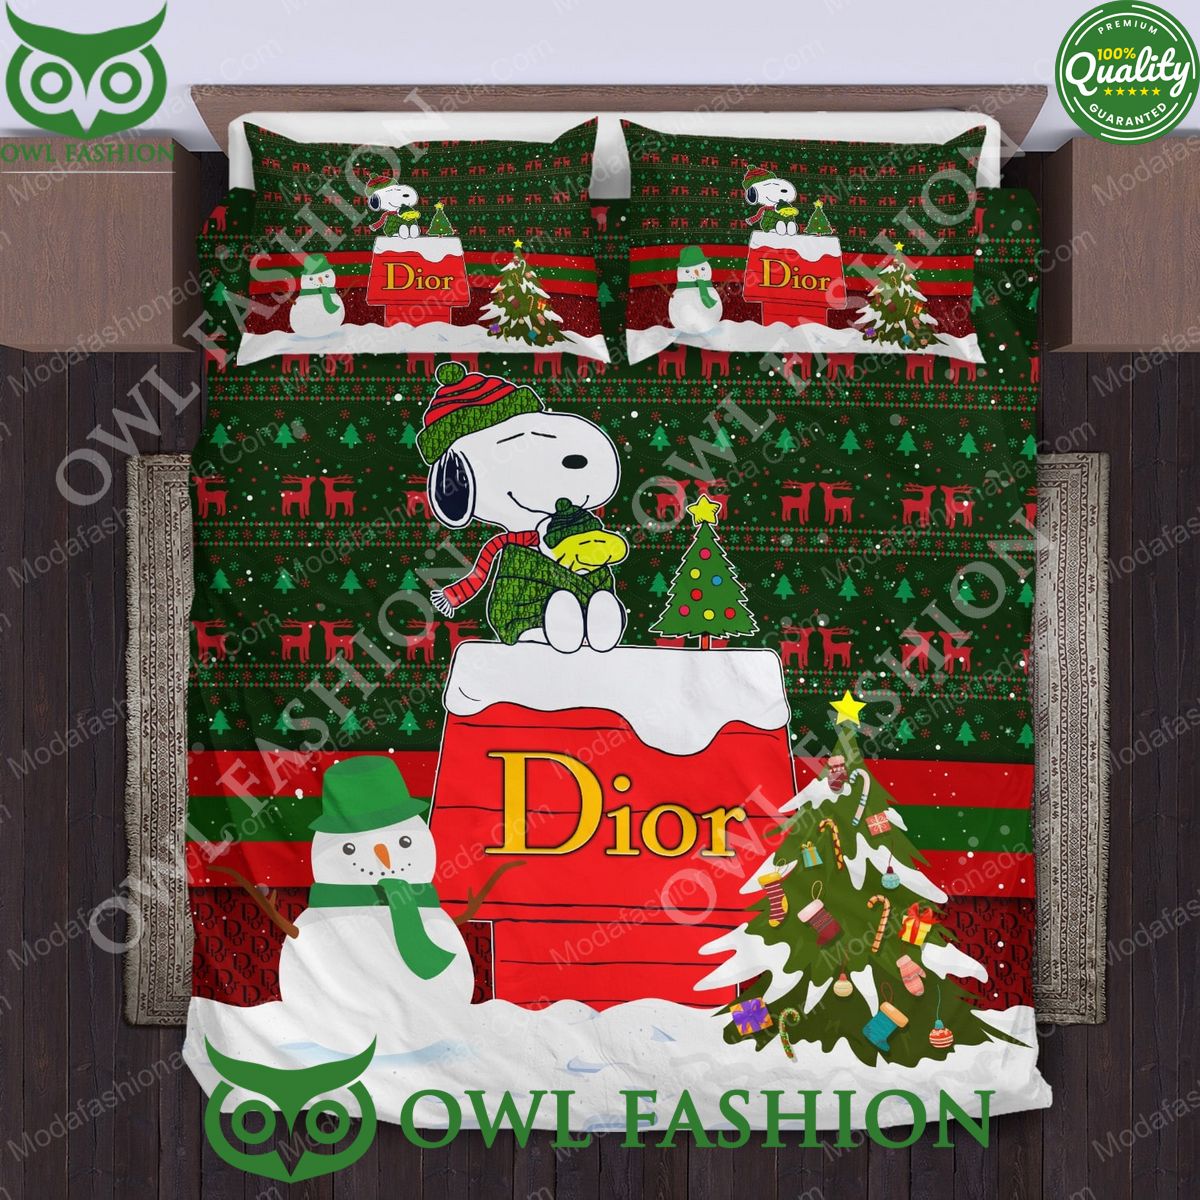 snoopy dog dior christmas premium bedding sets 1 yTouy.jpg